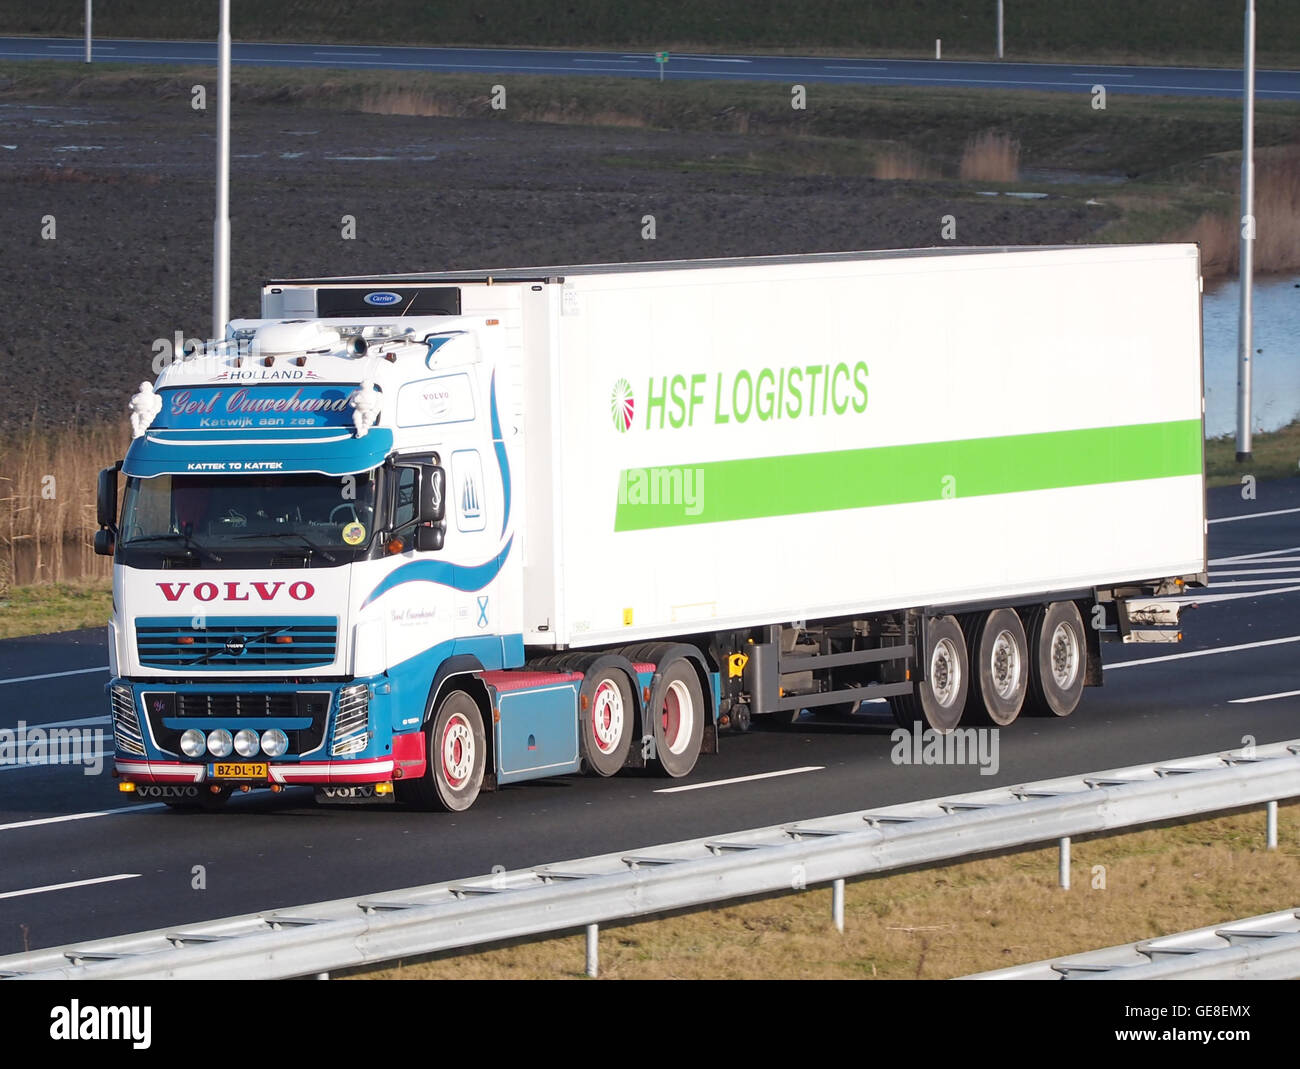 Volvo, Gert Ouwehand HSF Logistics Stockfoto